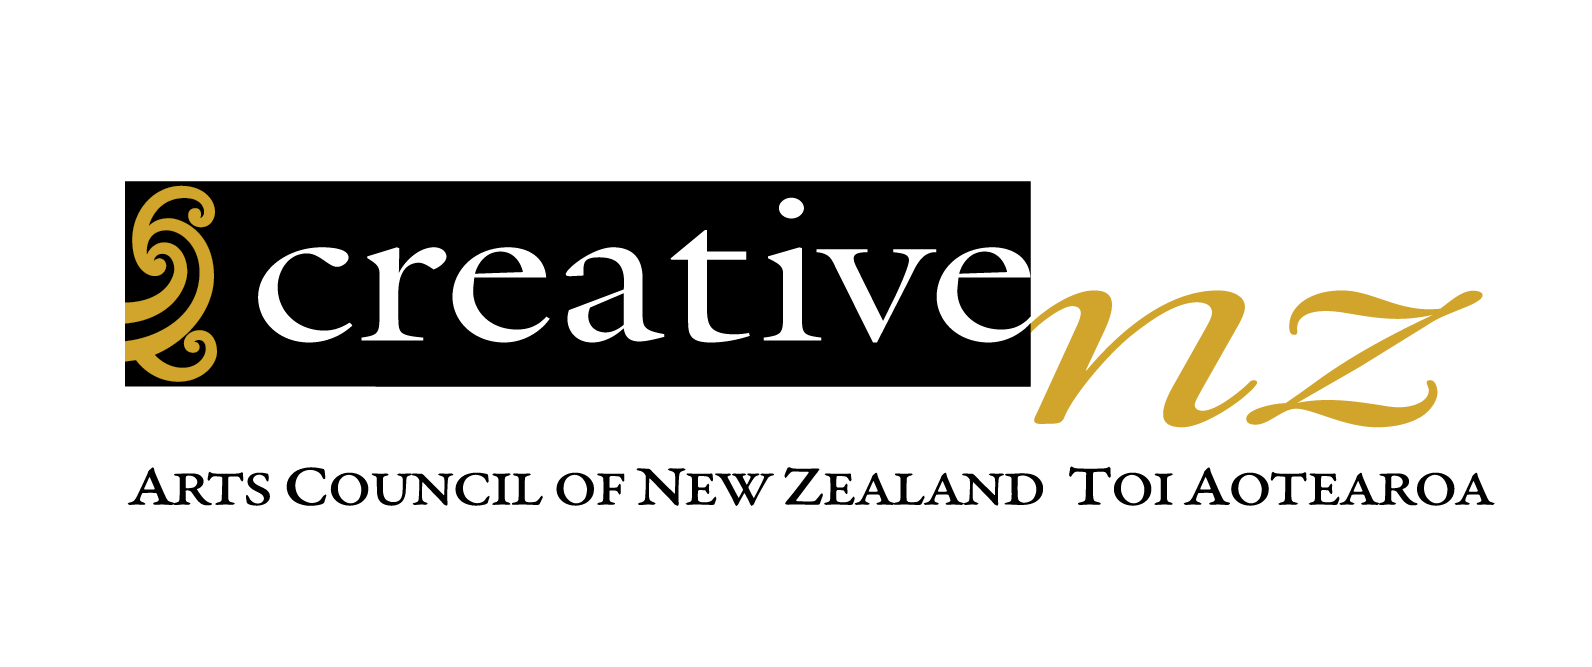 creative nz logo